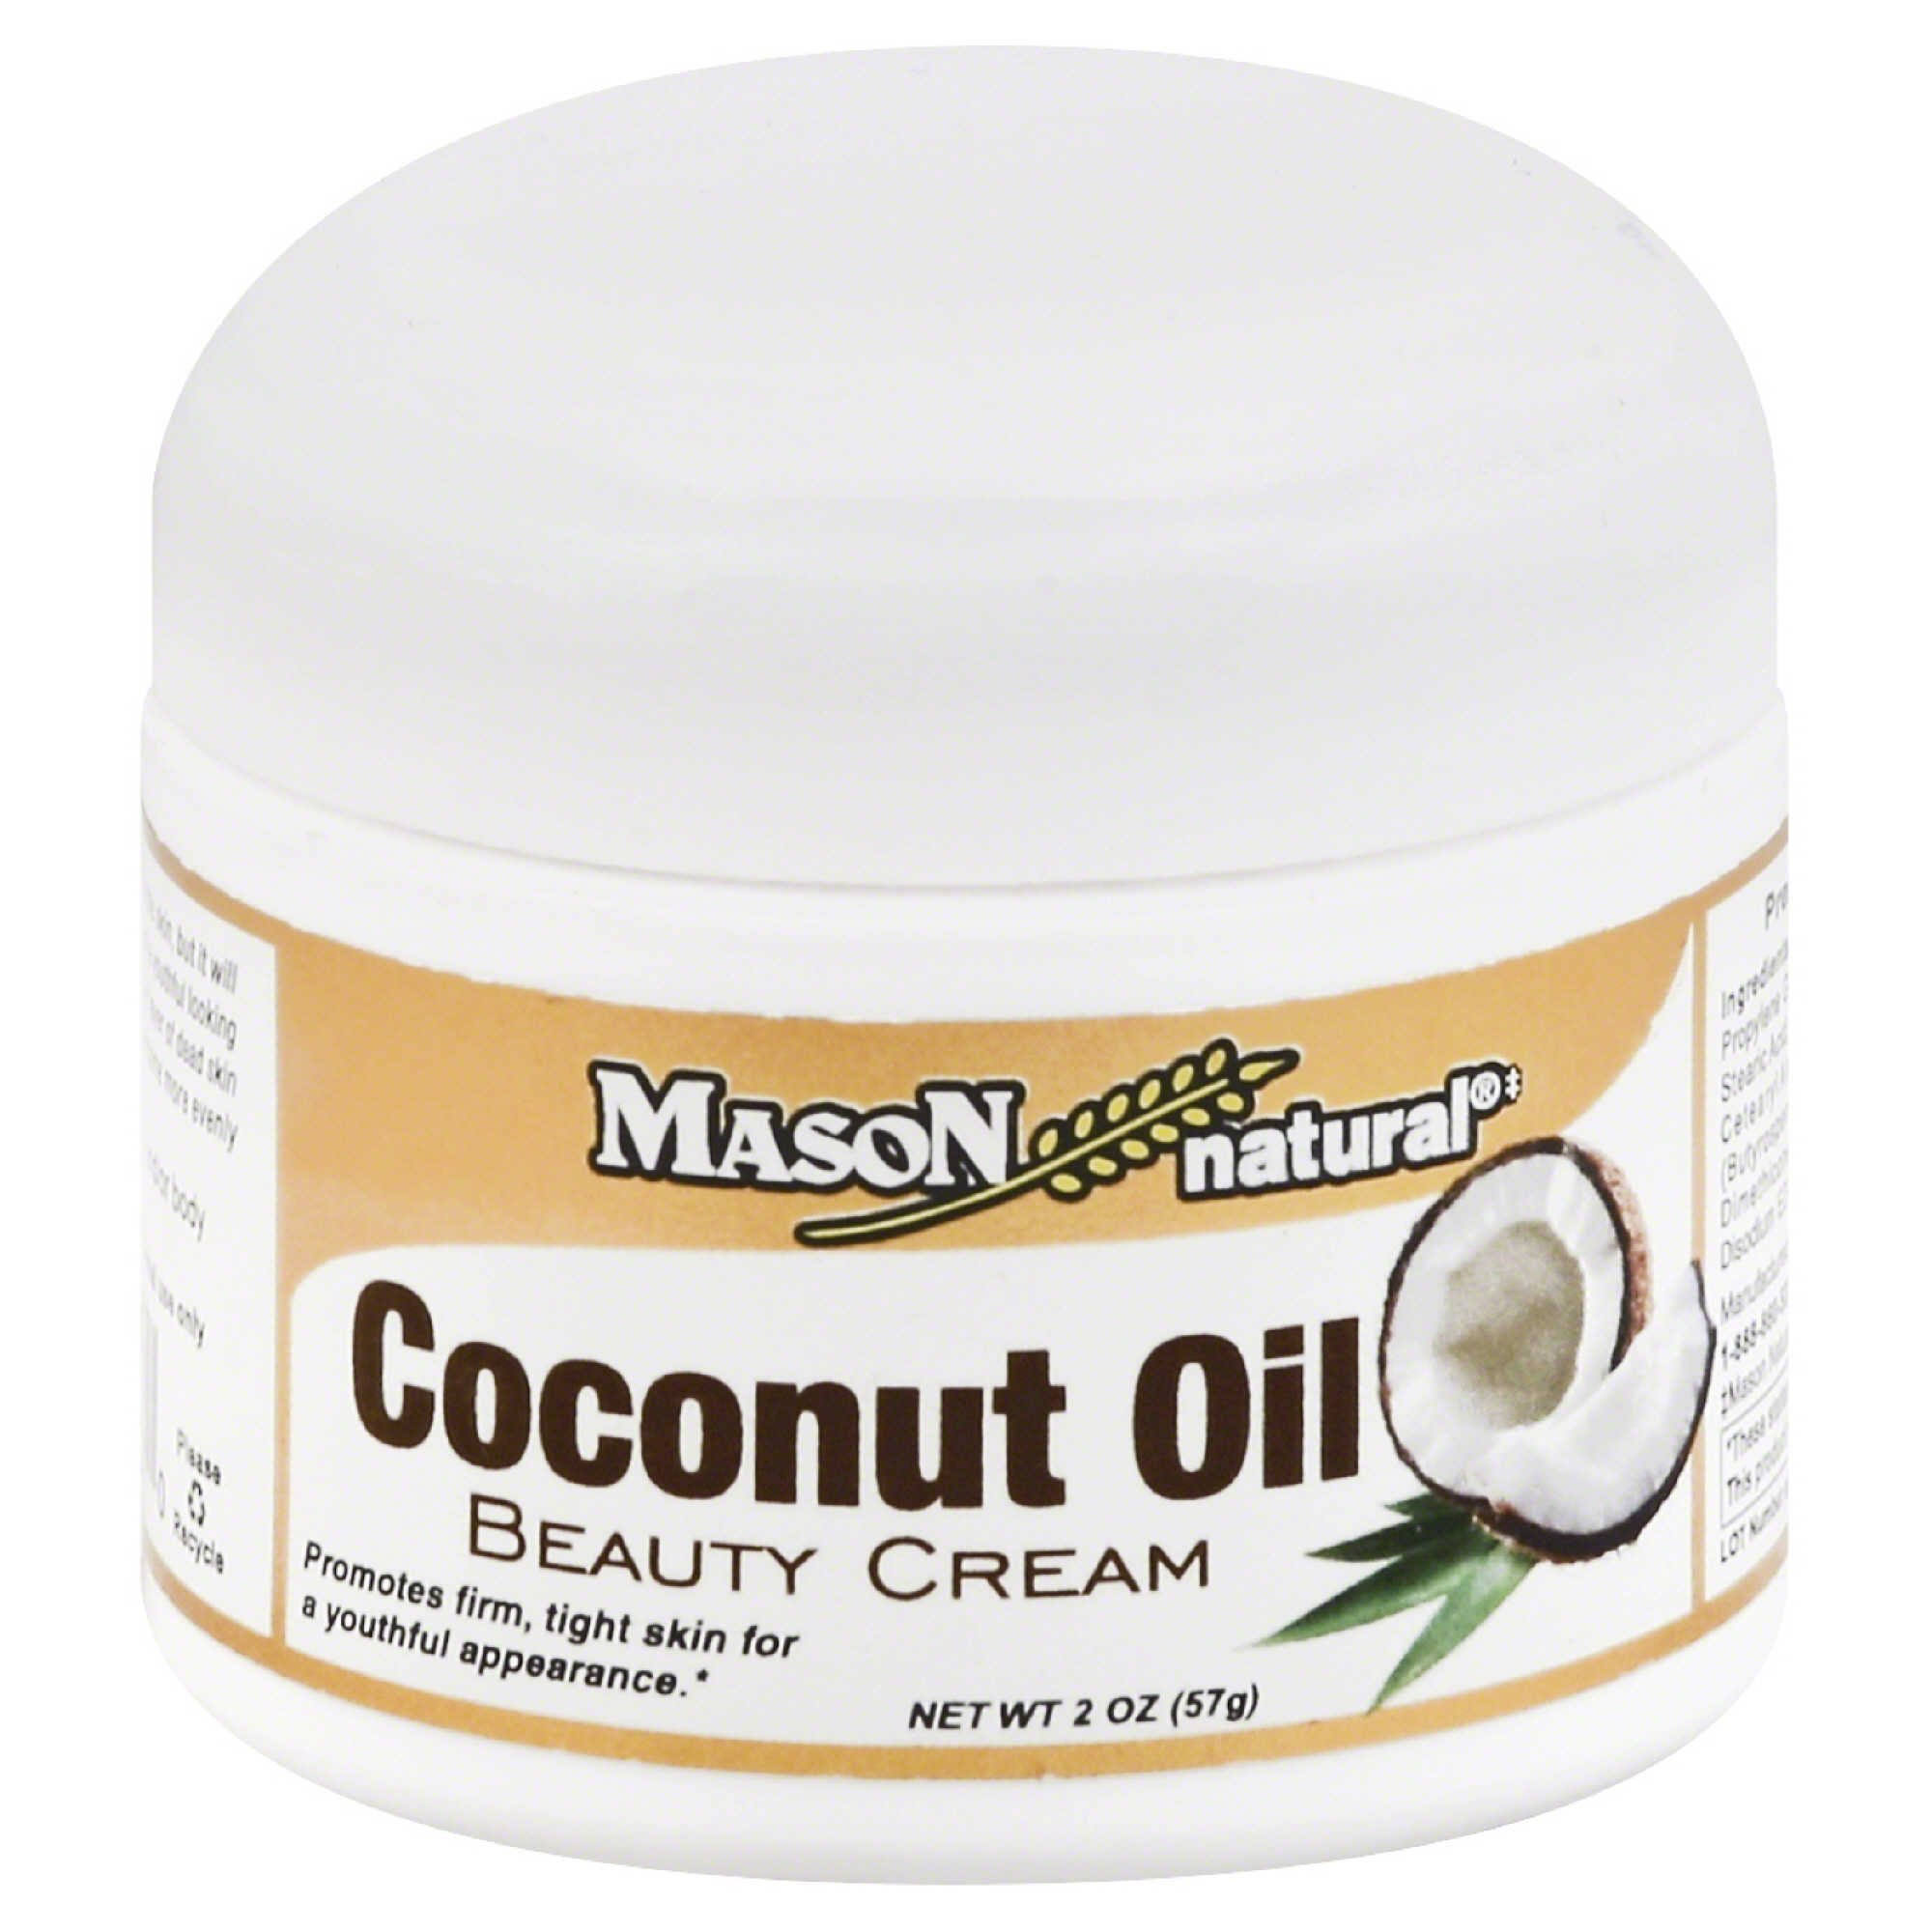 Mason Natural Coconut Oil Beauty Cream - 57g